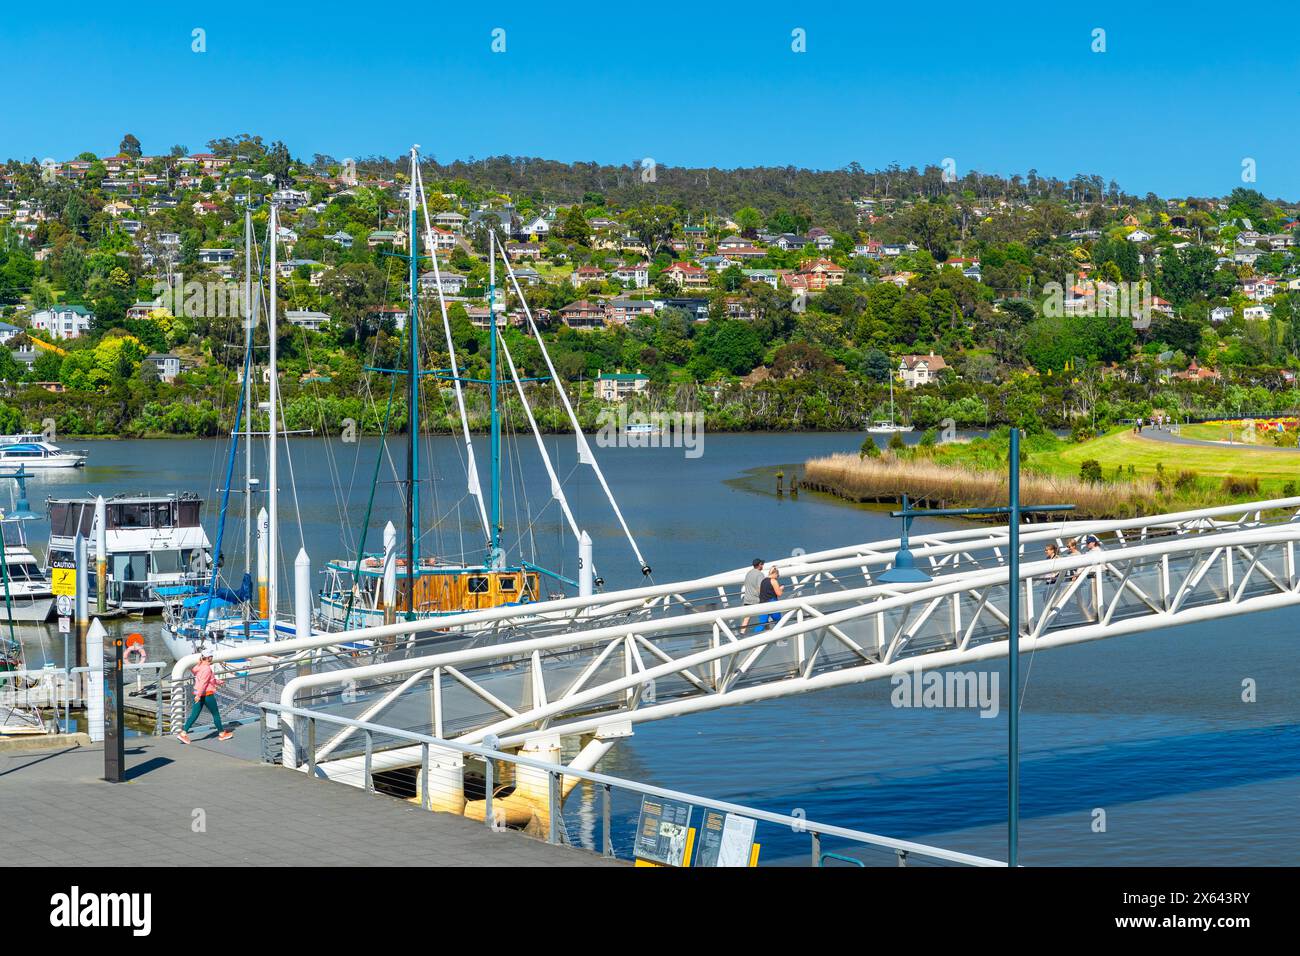 The North Bank Pedestrian Bridge in Seaport, Launceston, Tasmania, Australia, at the North Esk River looking towards the Tamar River and the hilltop L Stock Photo